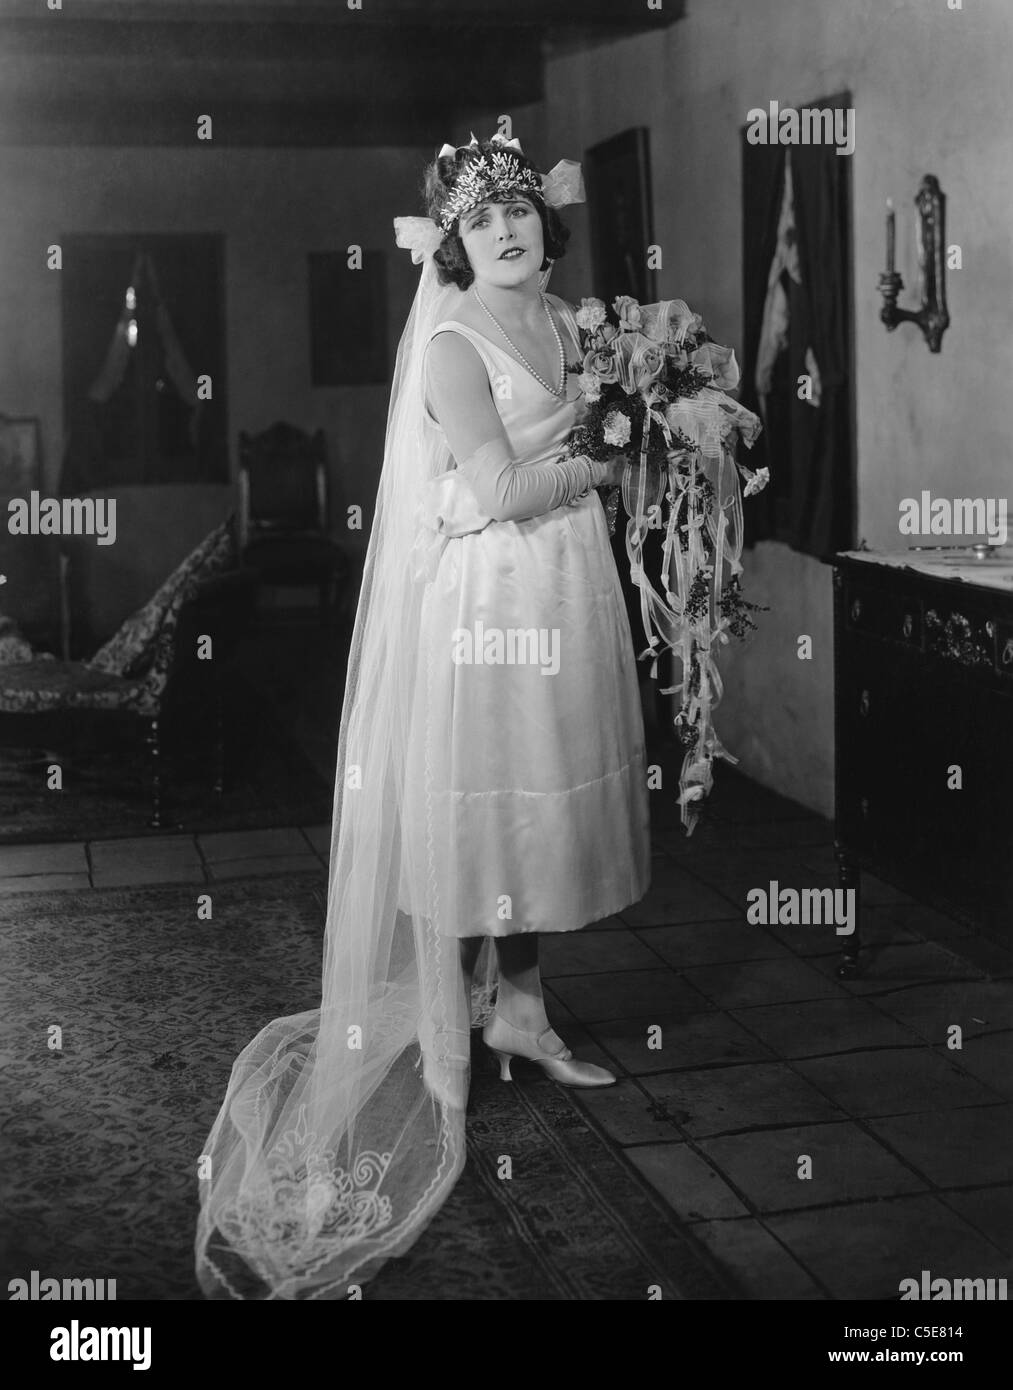 Blushing bride Stock Photo